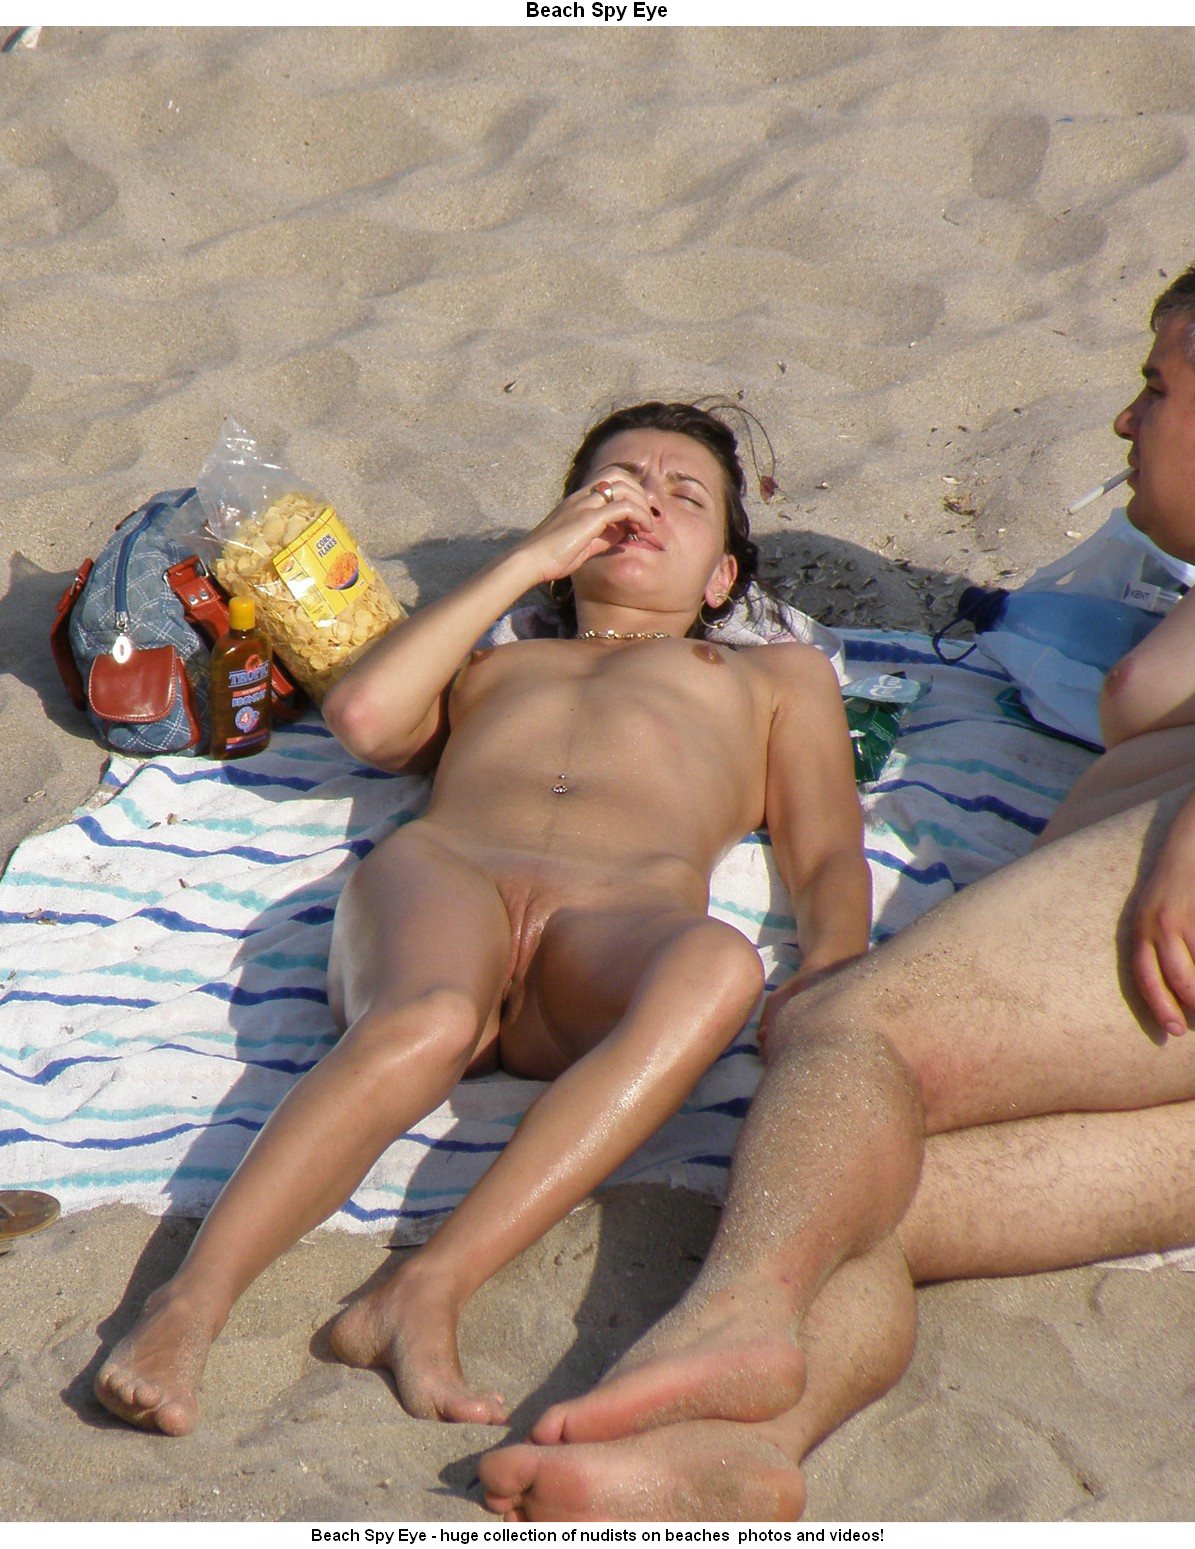 Nude Beaches Pics Nudist beach photos - well-built nudist girls.. Image 3